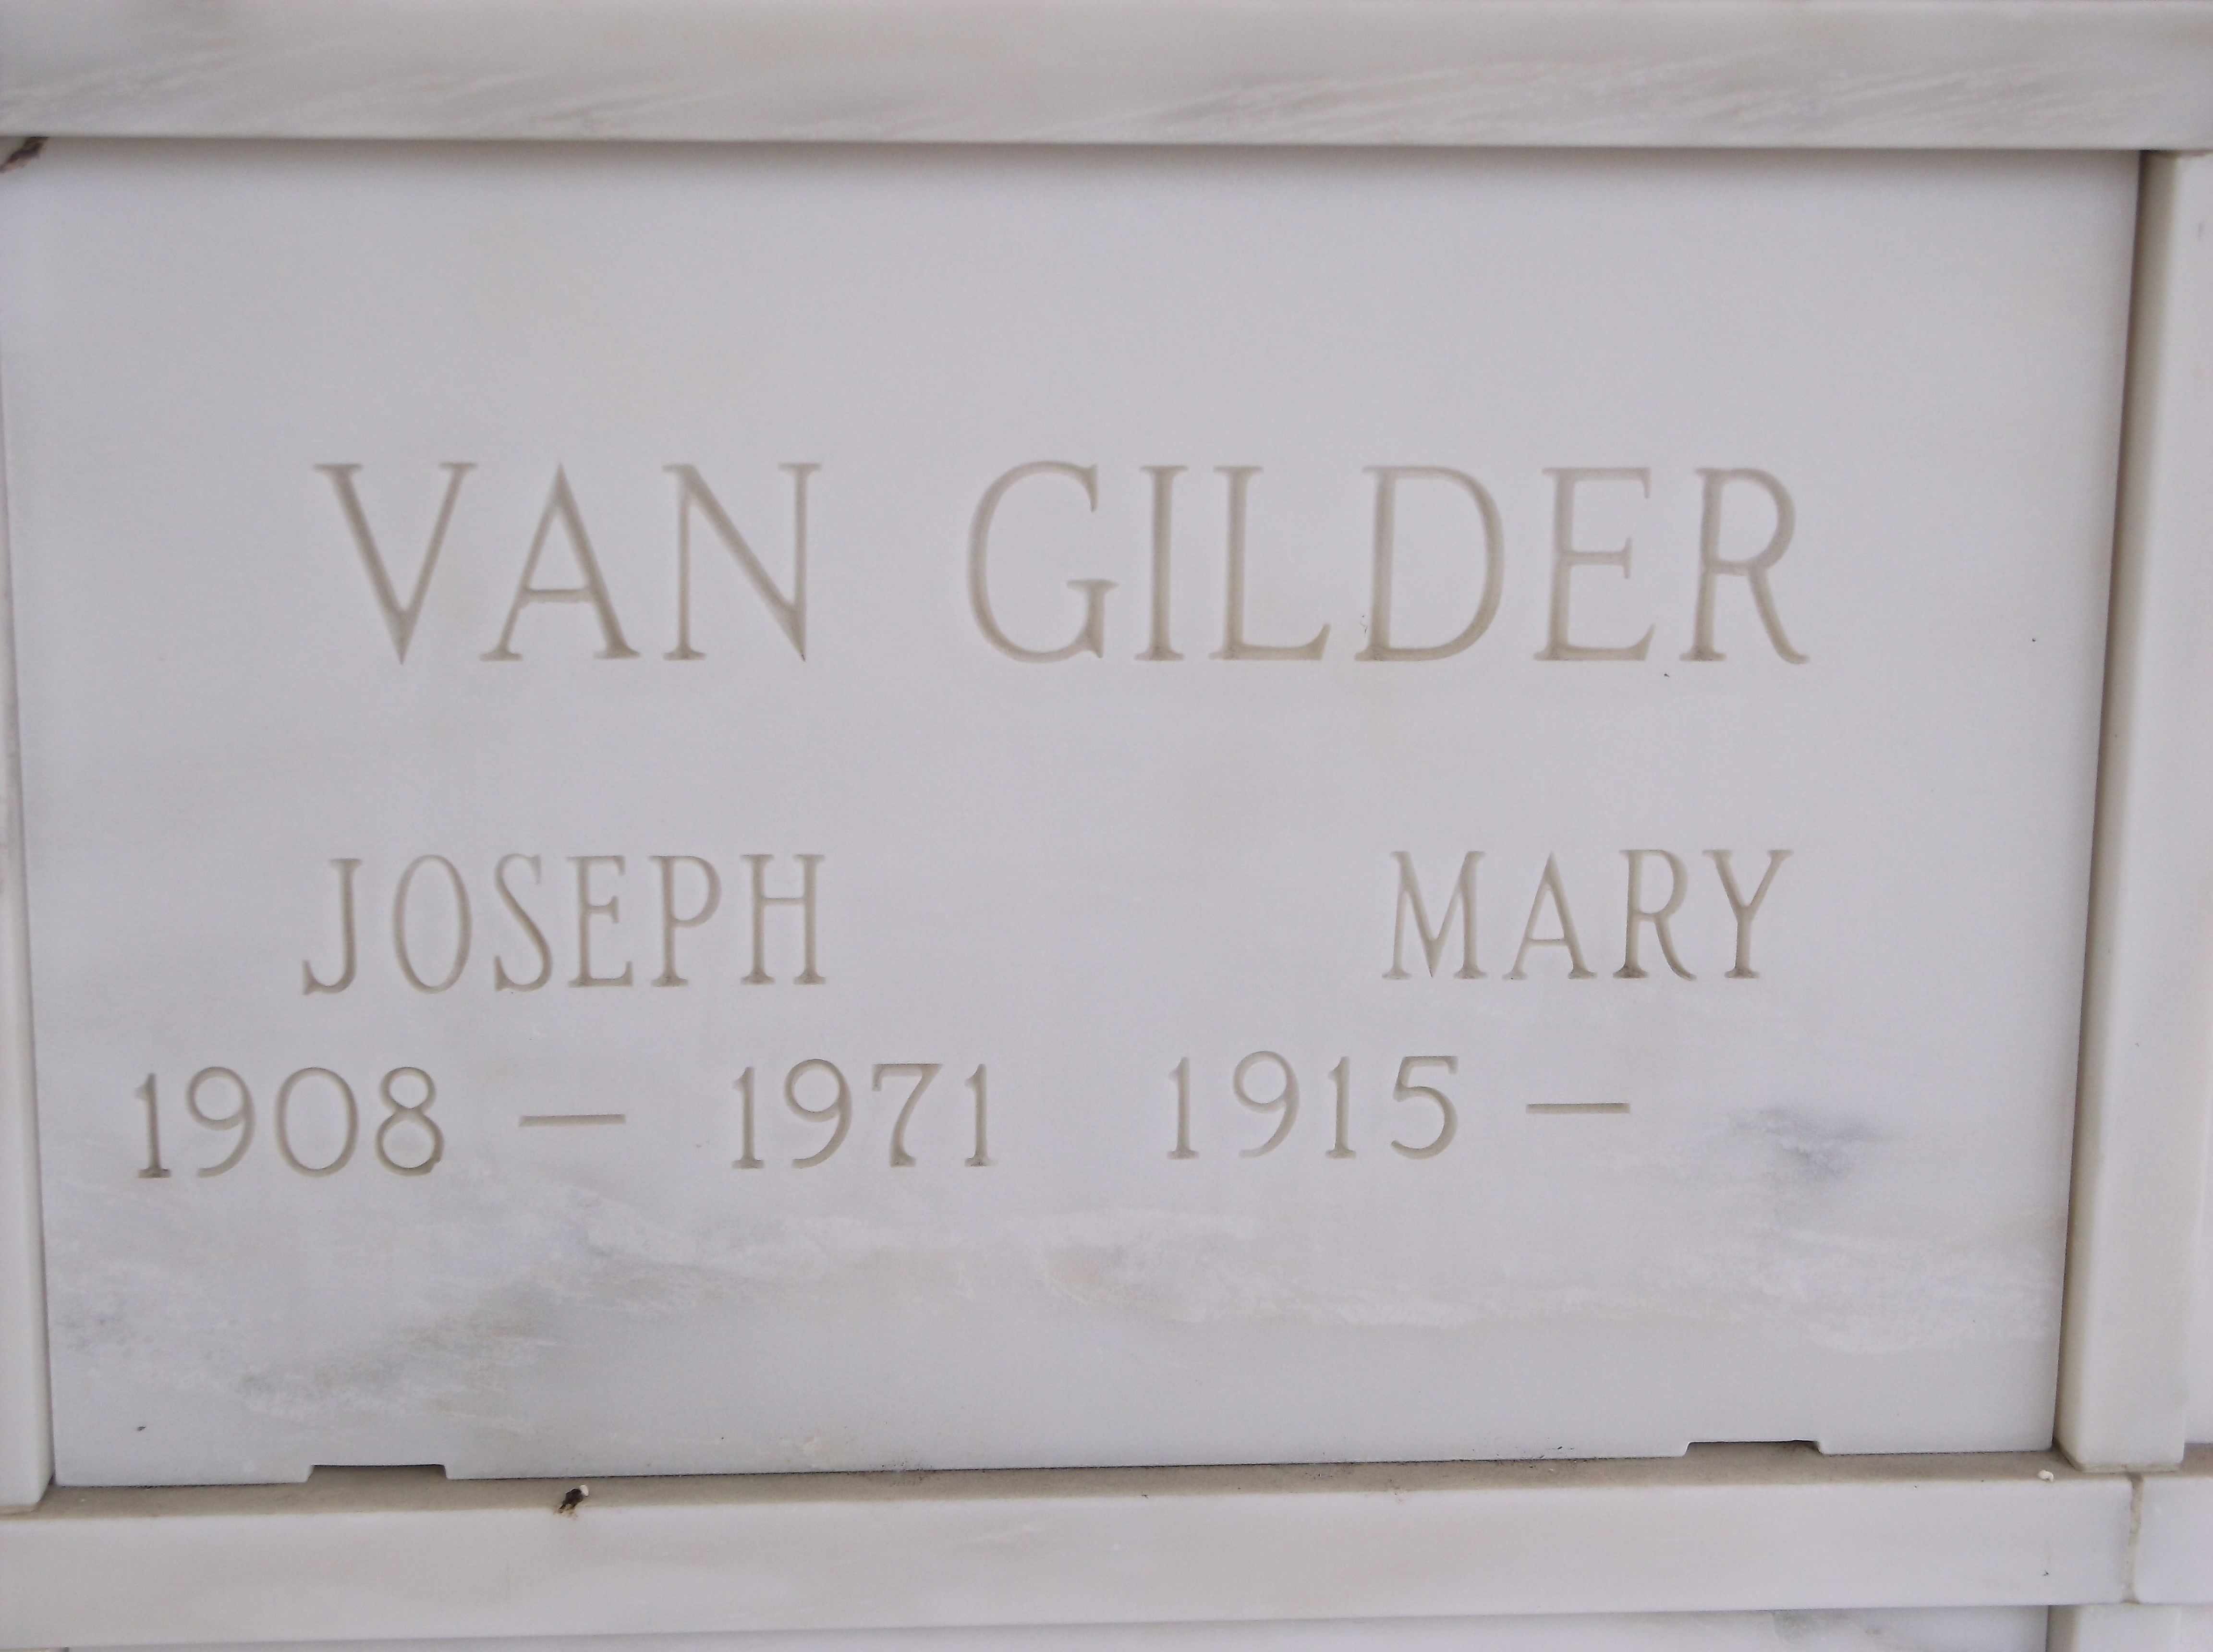 Joseph Van Gilder